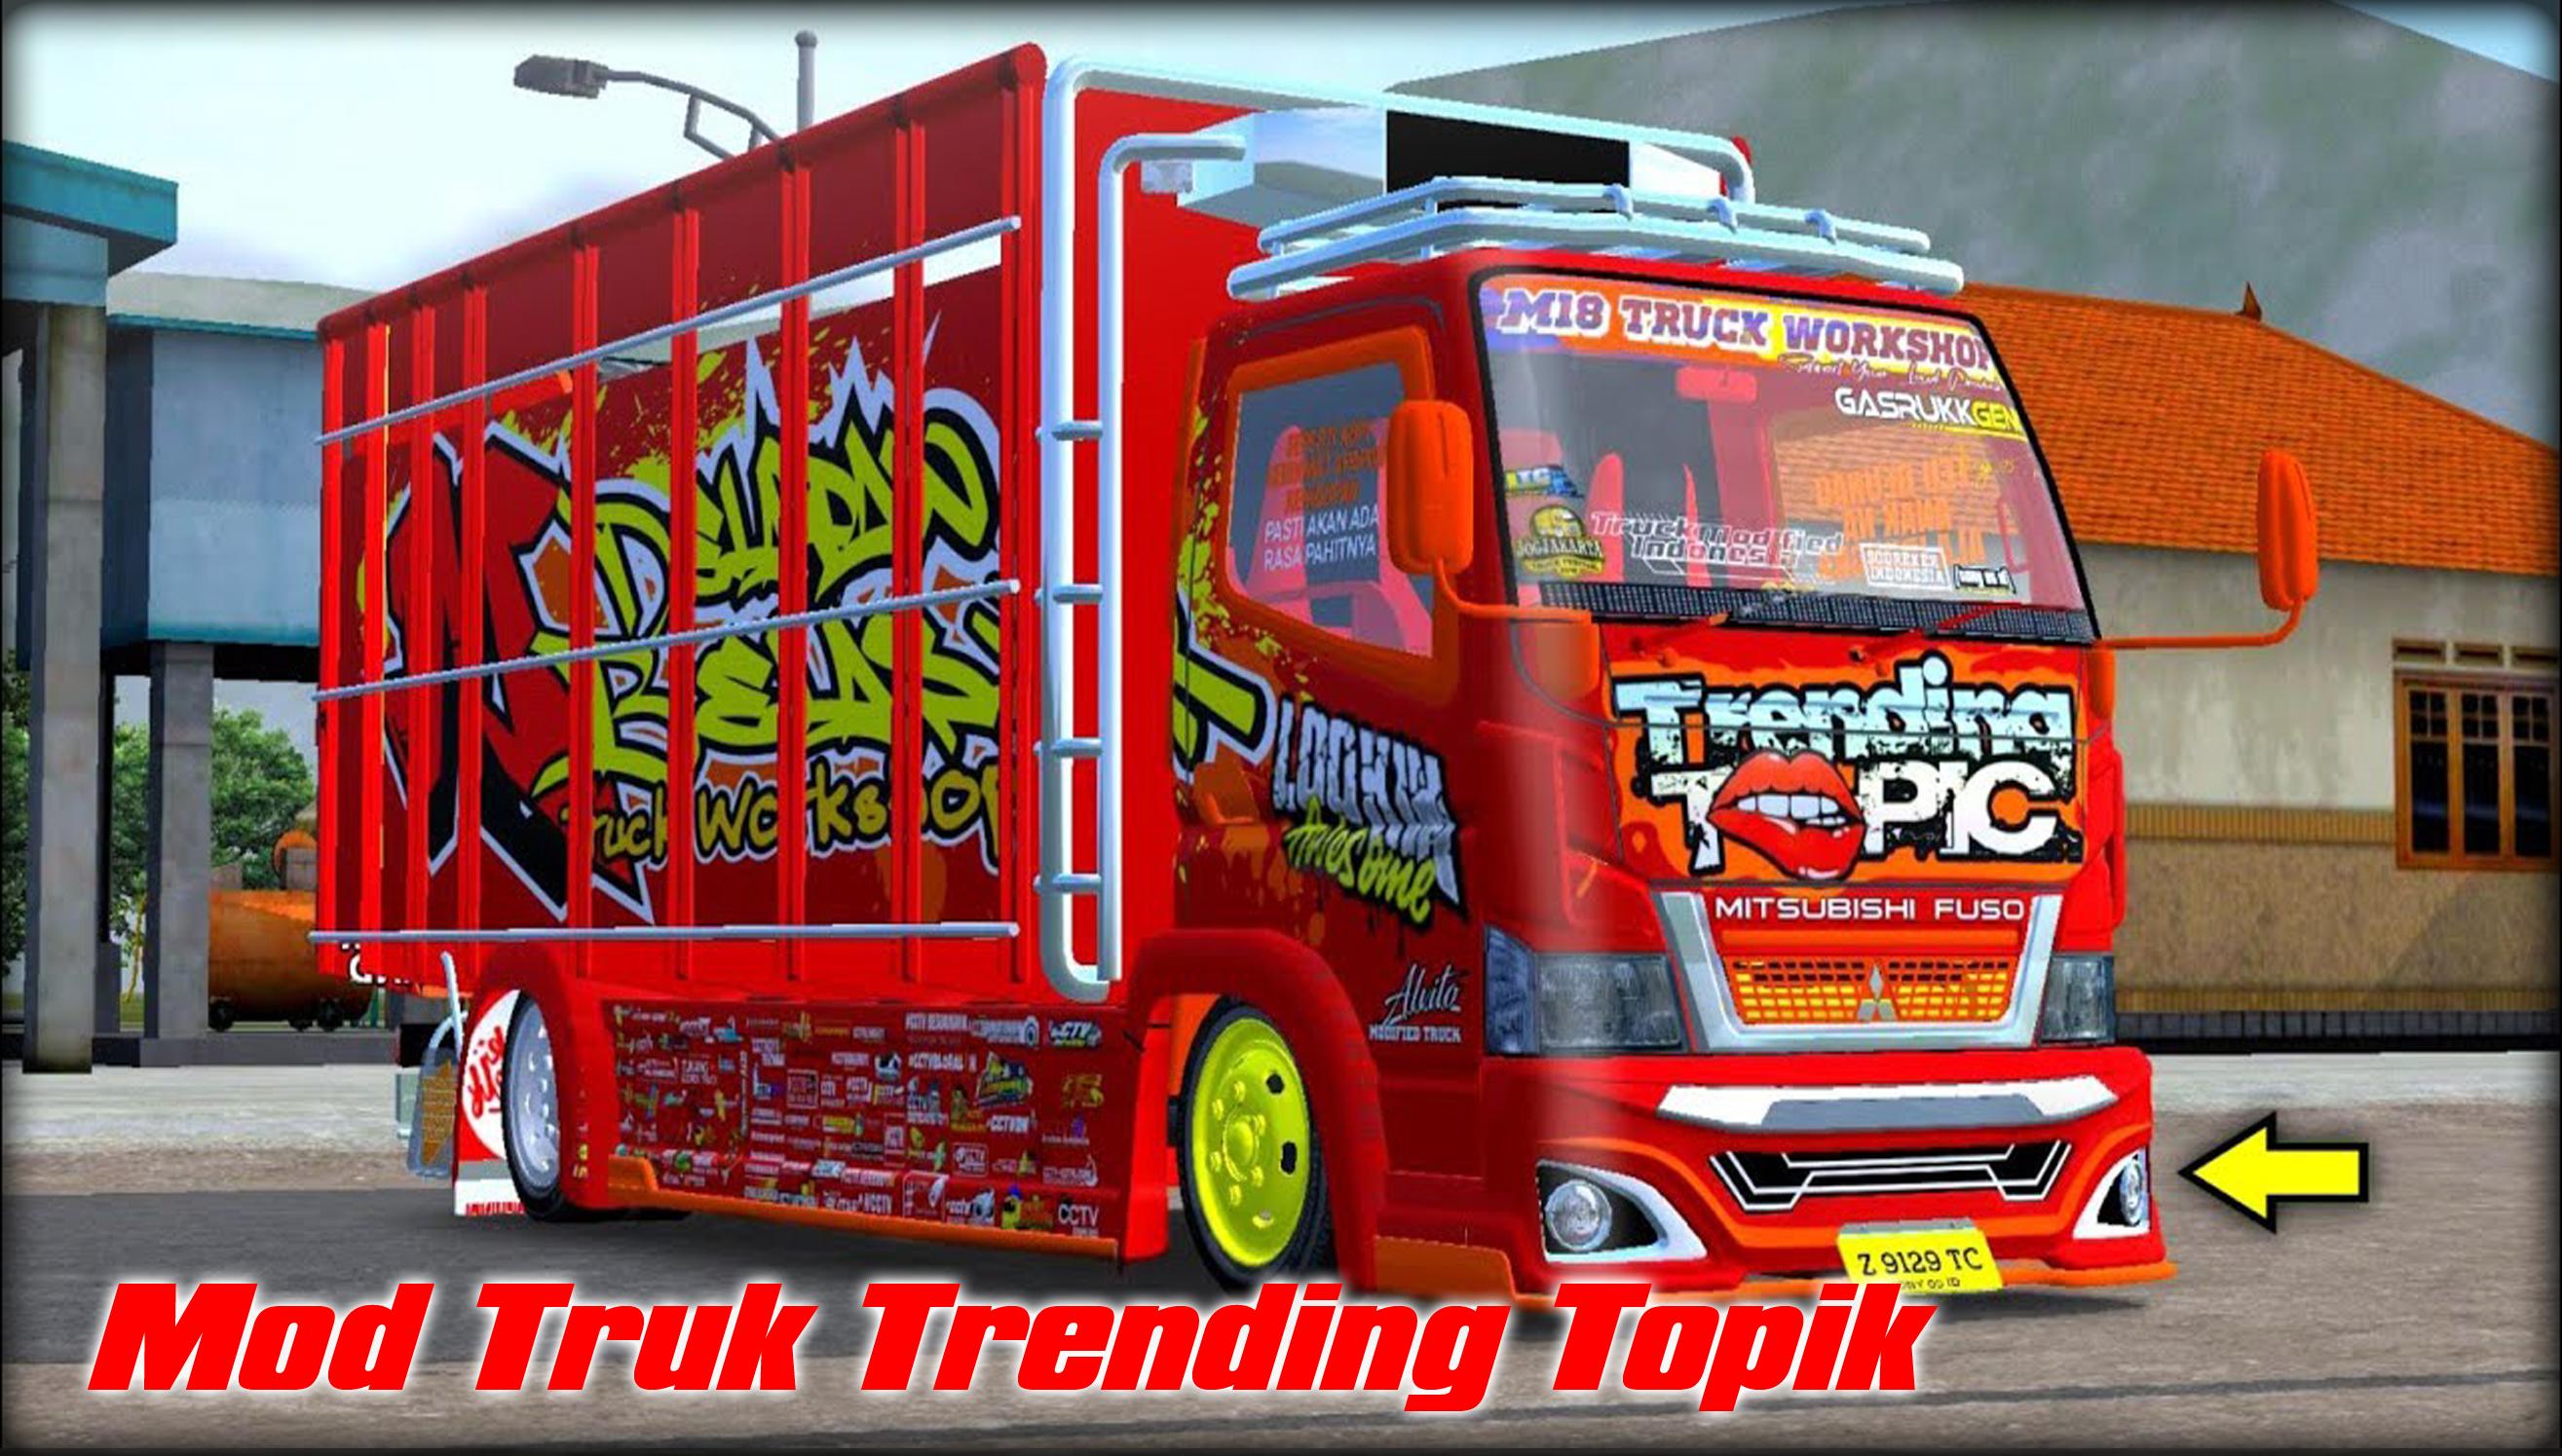 Truk trending topik